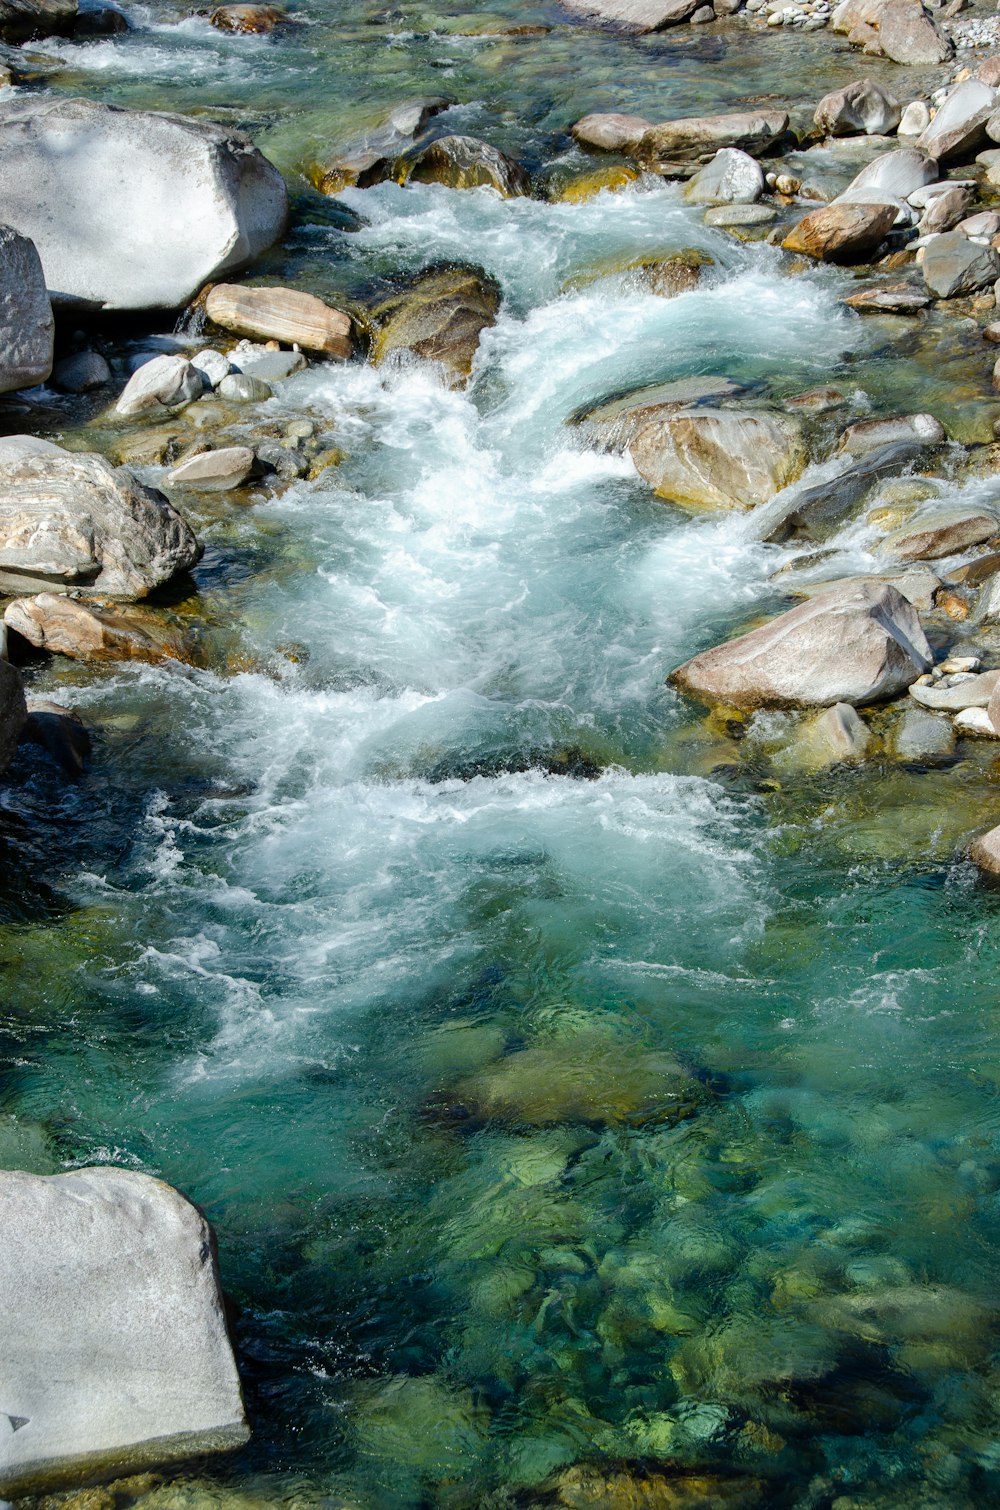 River Flow Pictures | Download Free Images on Unsplash